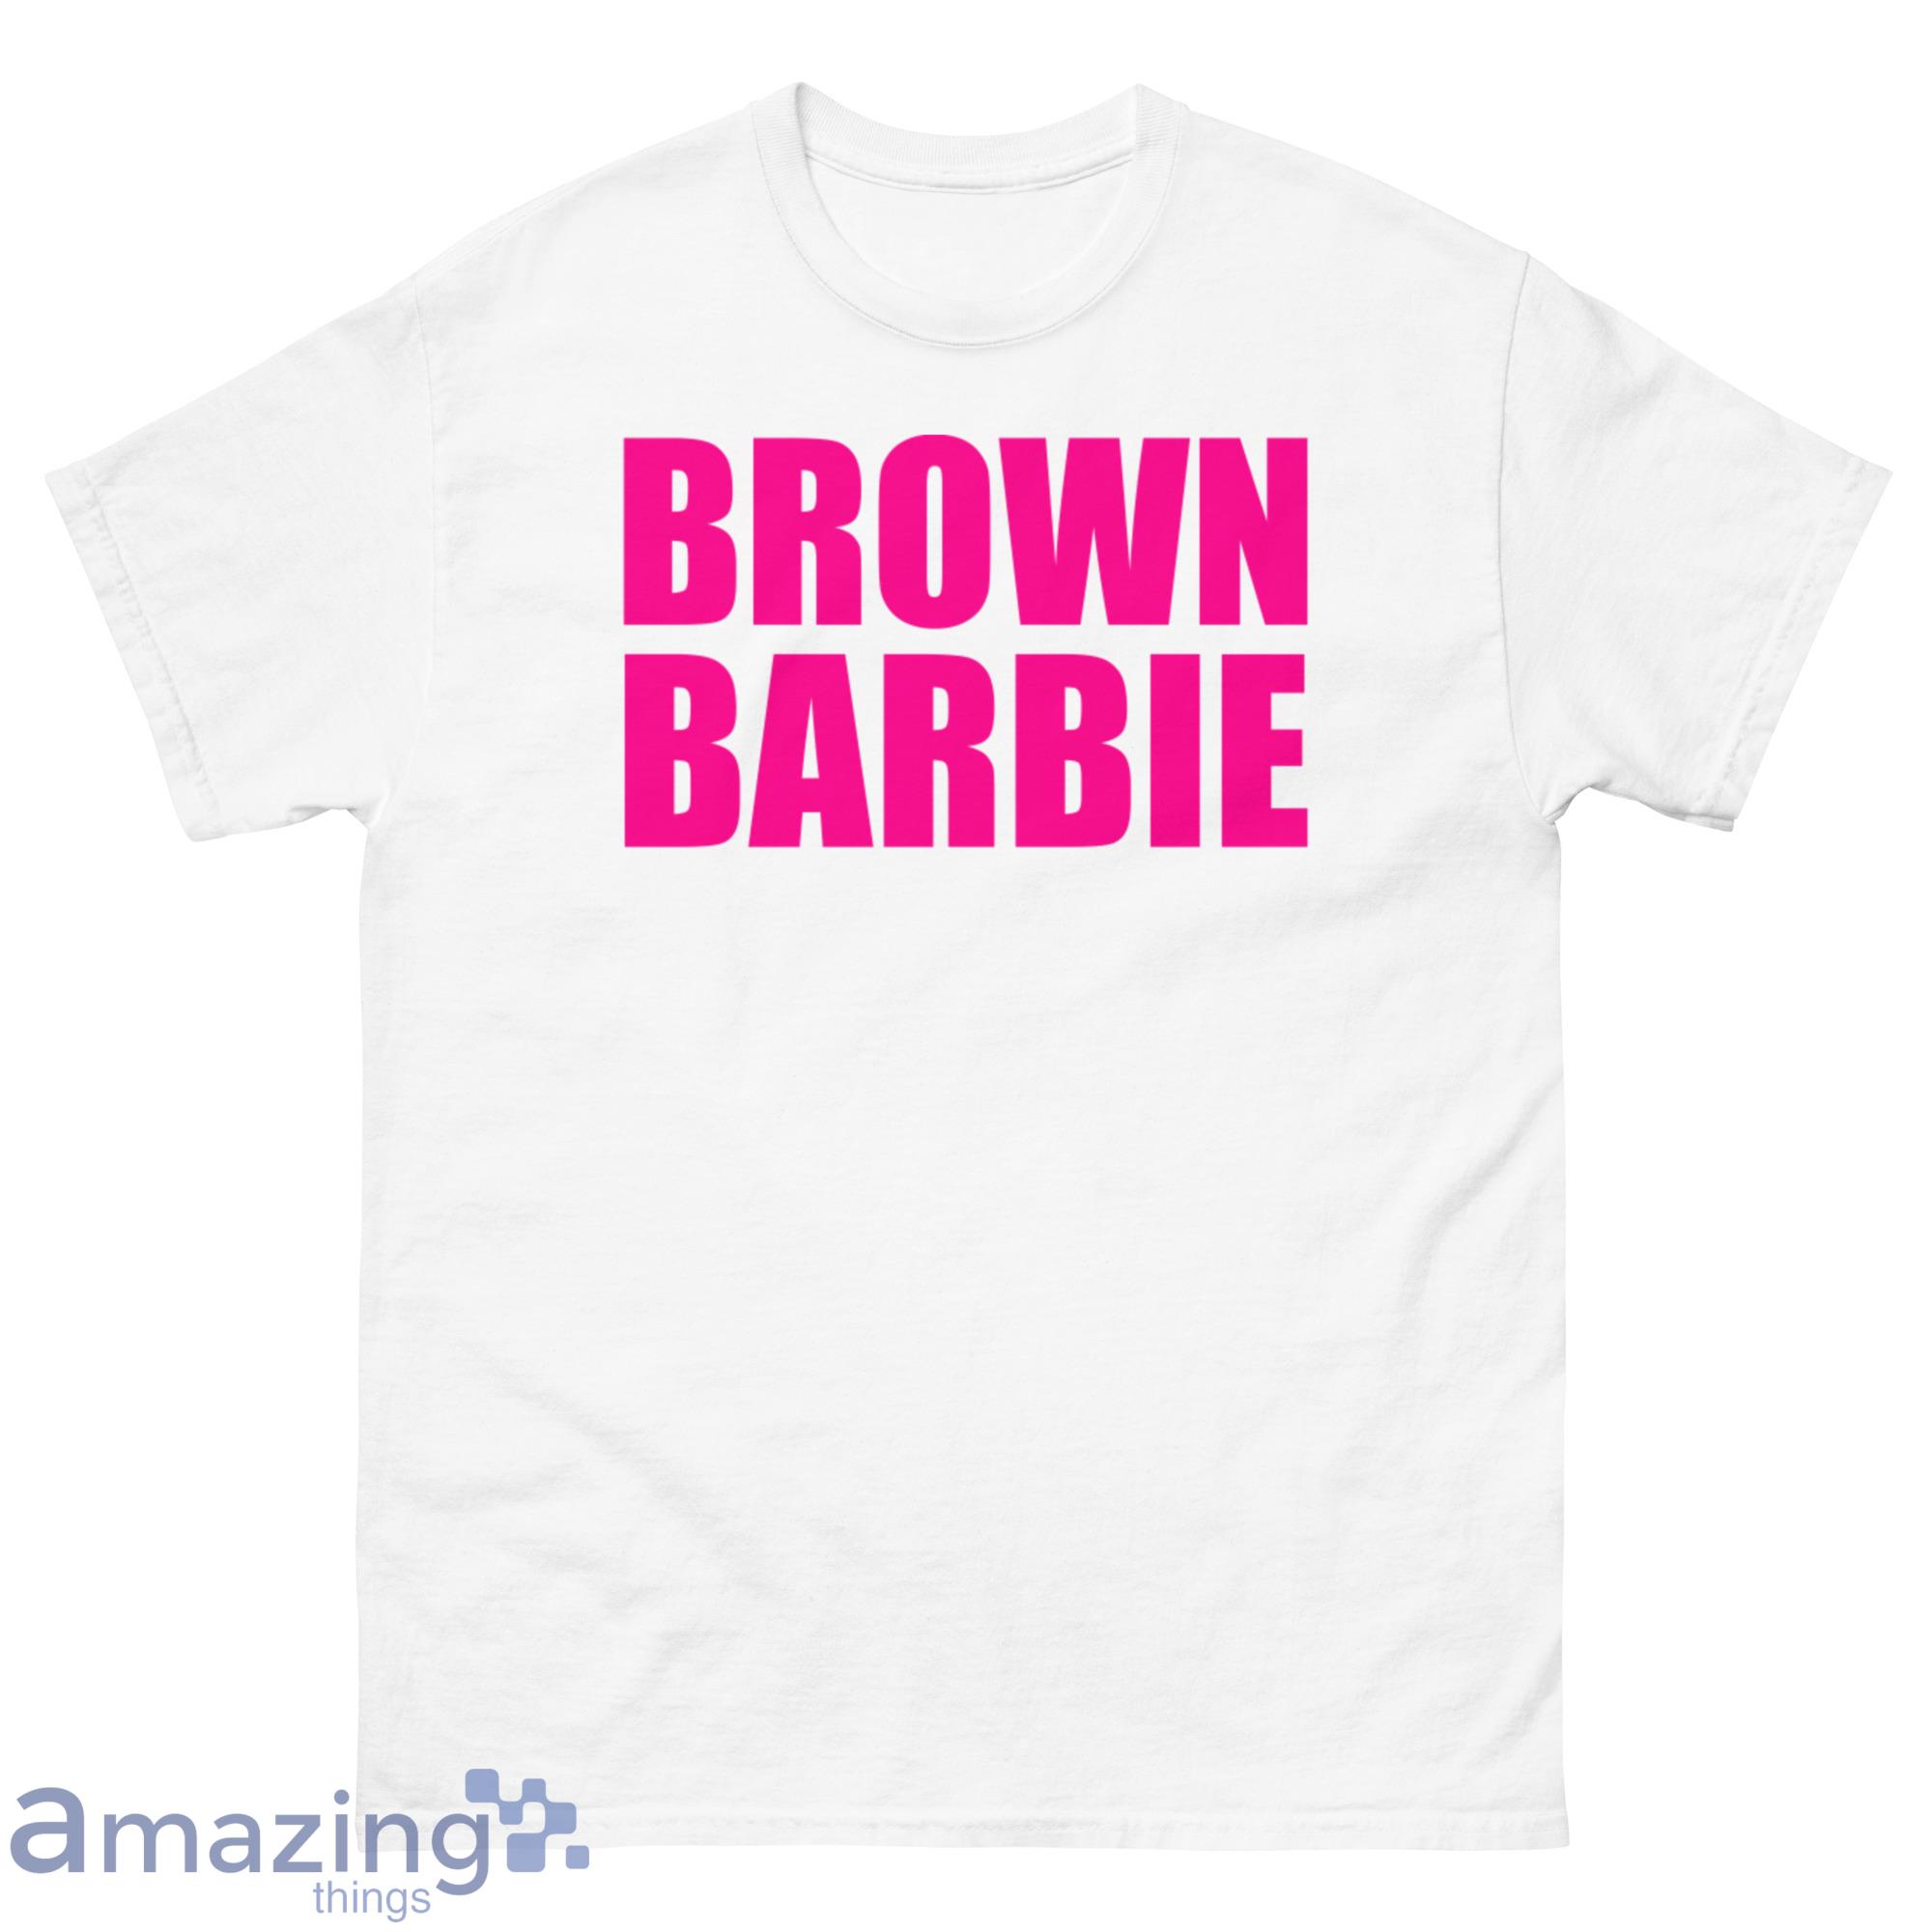 Barbie Brune Shirt - G500 Men’s Classic T-Shirt-1